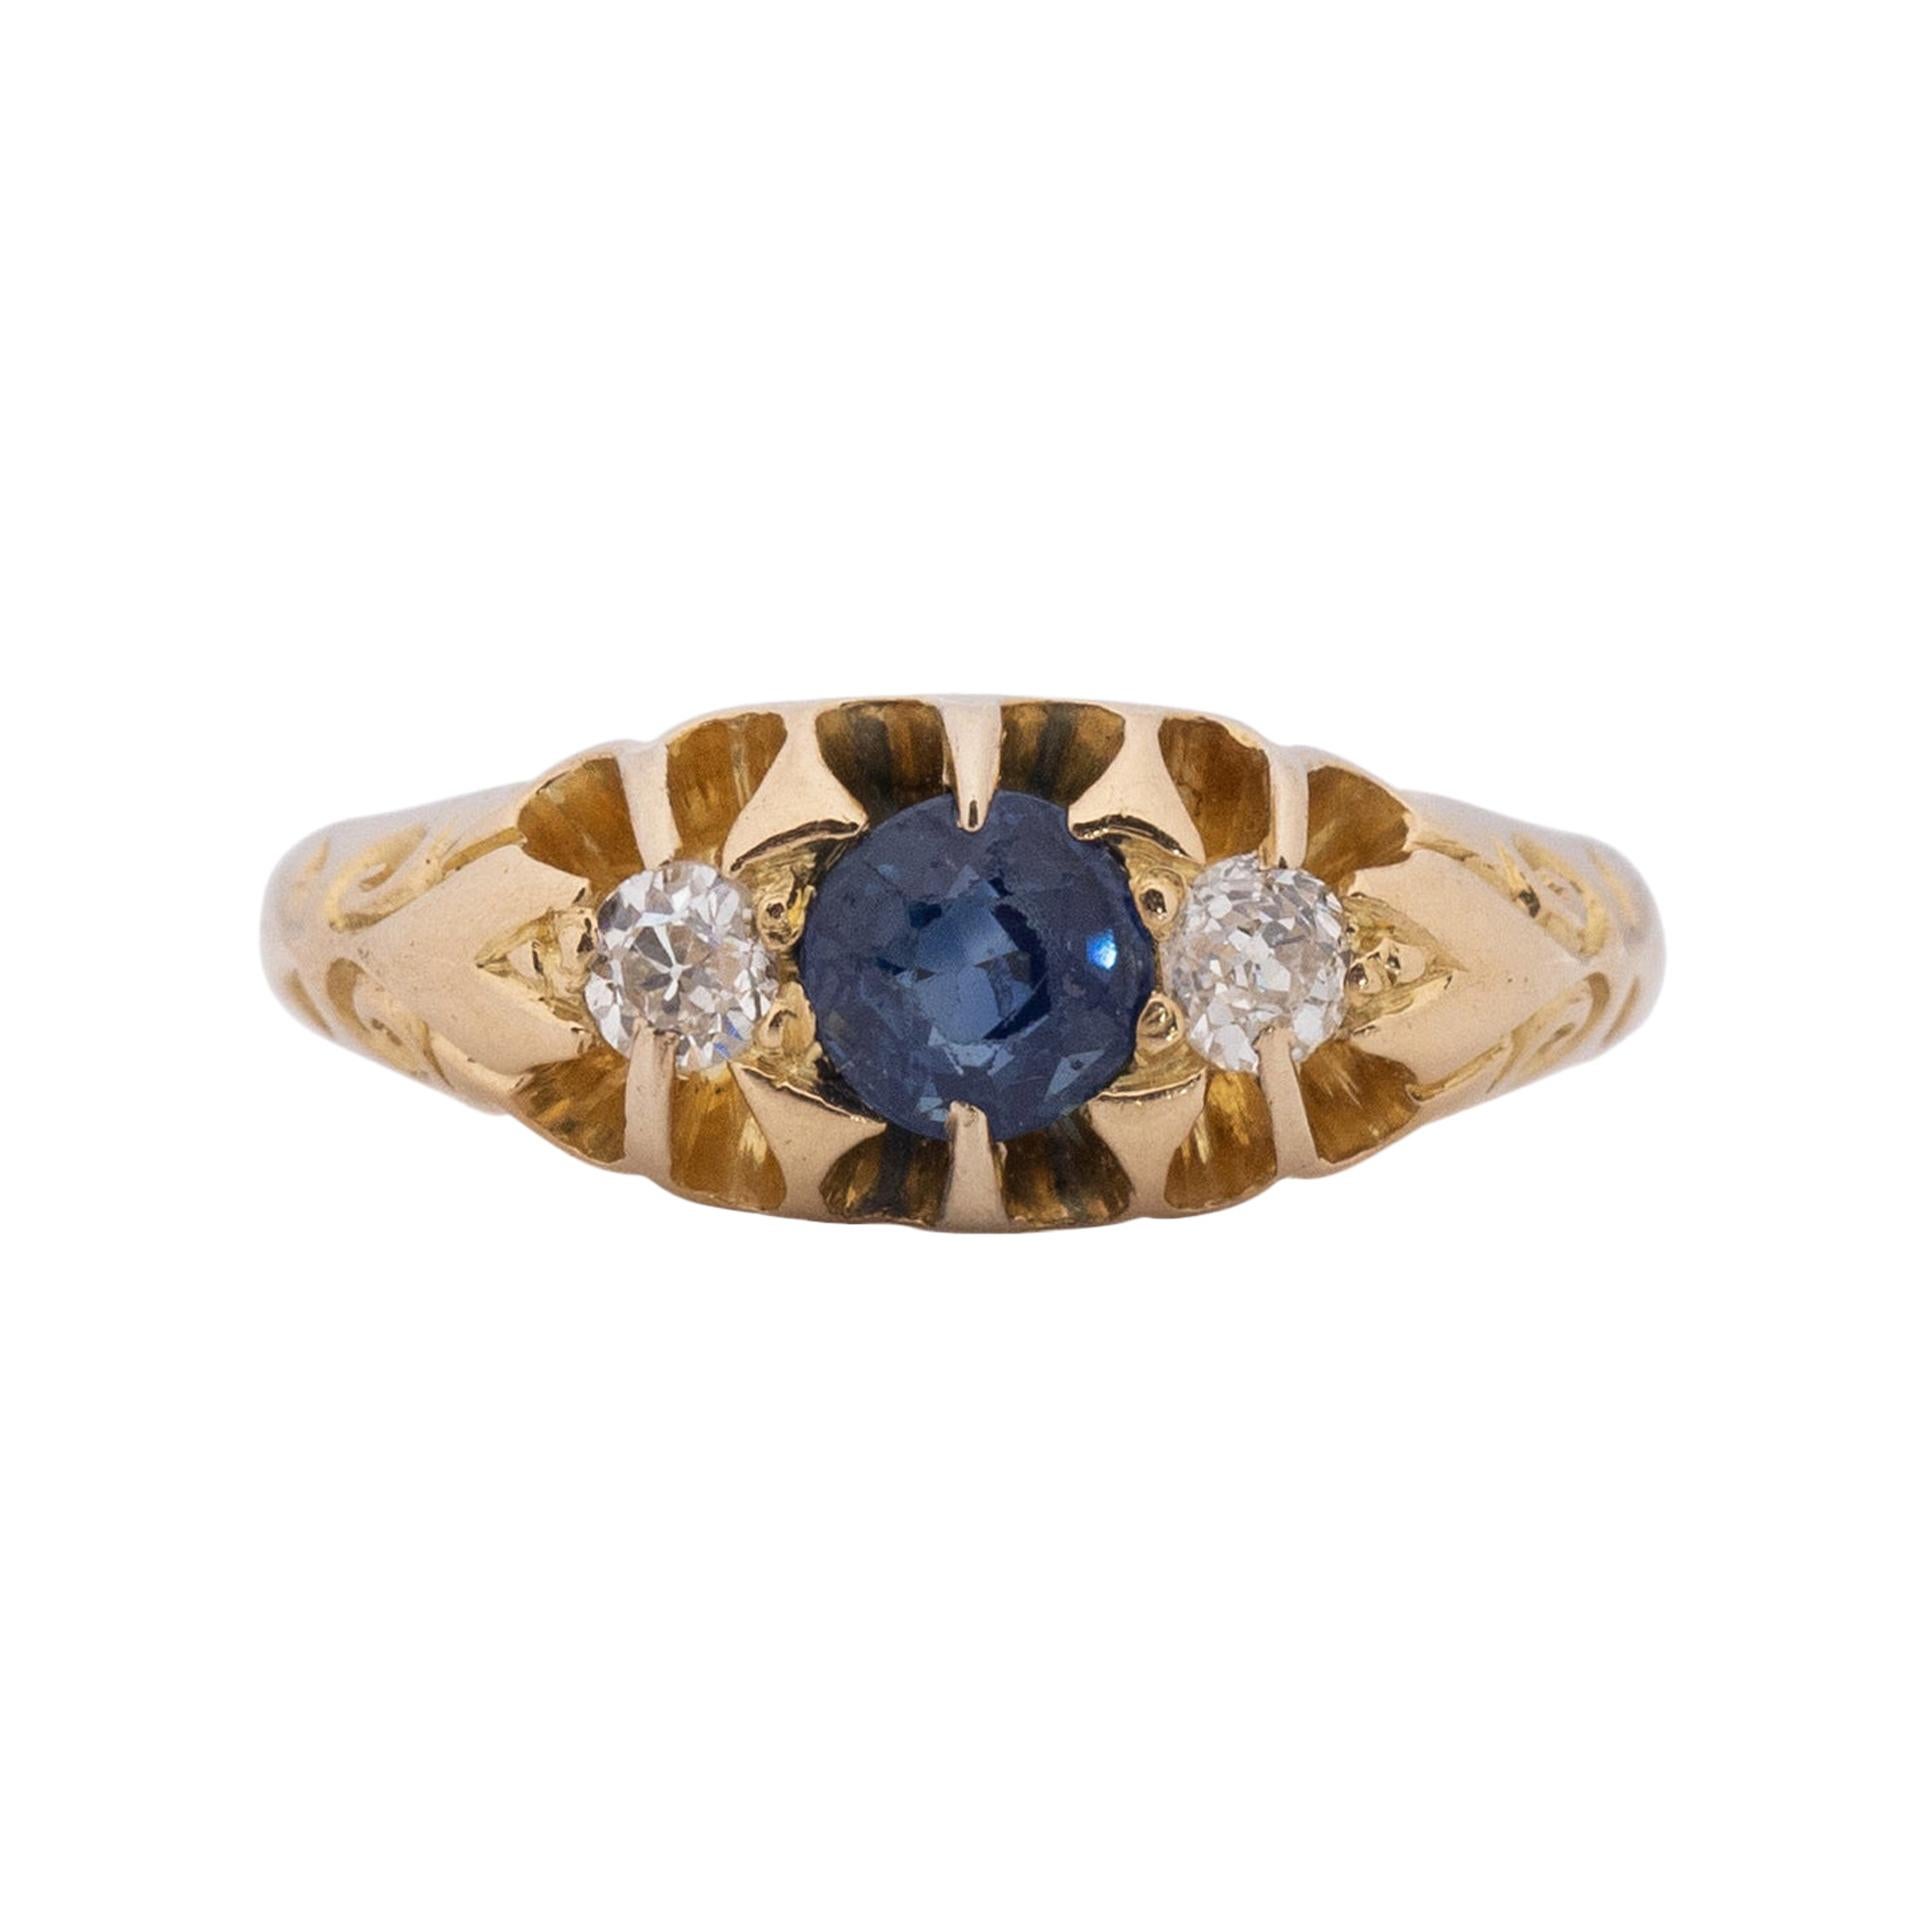 Circa 1900's Victorian 18k Yellow Gold Diamond and Sapphire Three Stone Ring